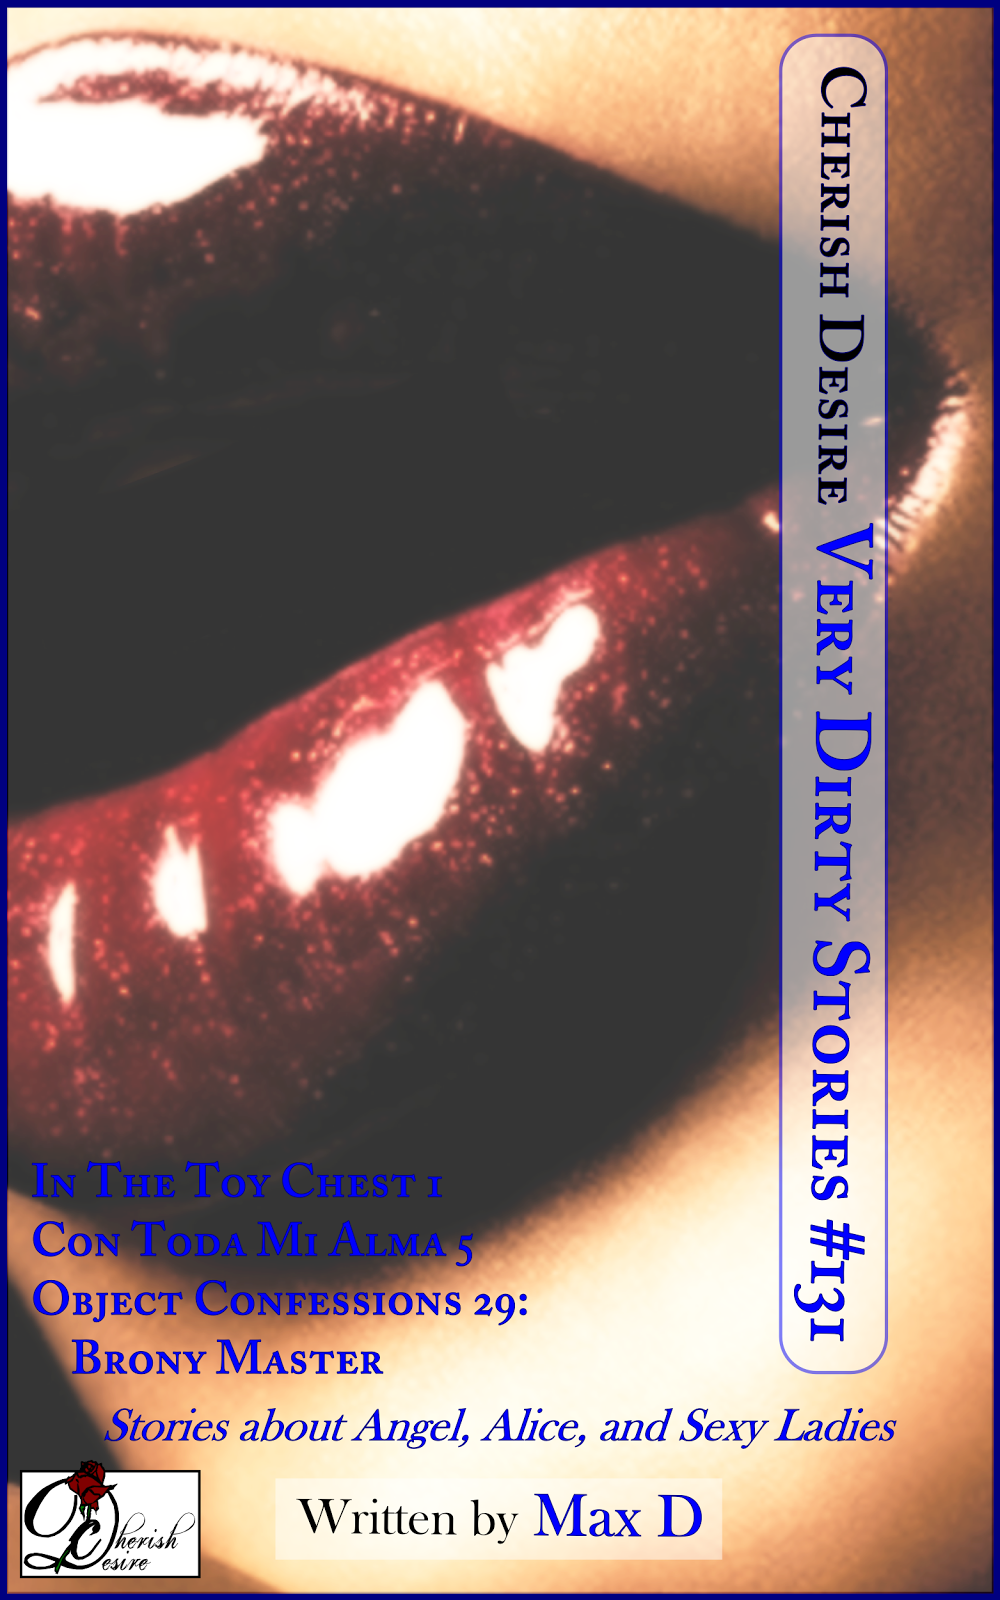 Cherish Desire: Very Dirty Stories #131, Max D, erotica